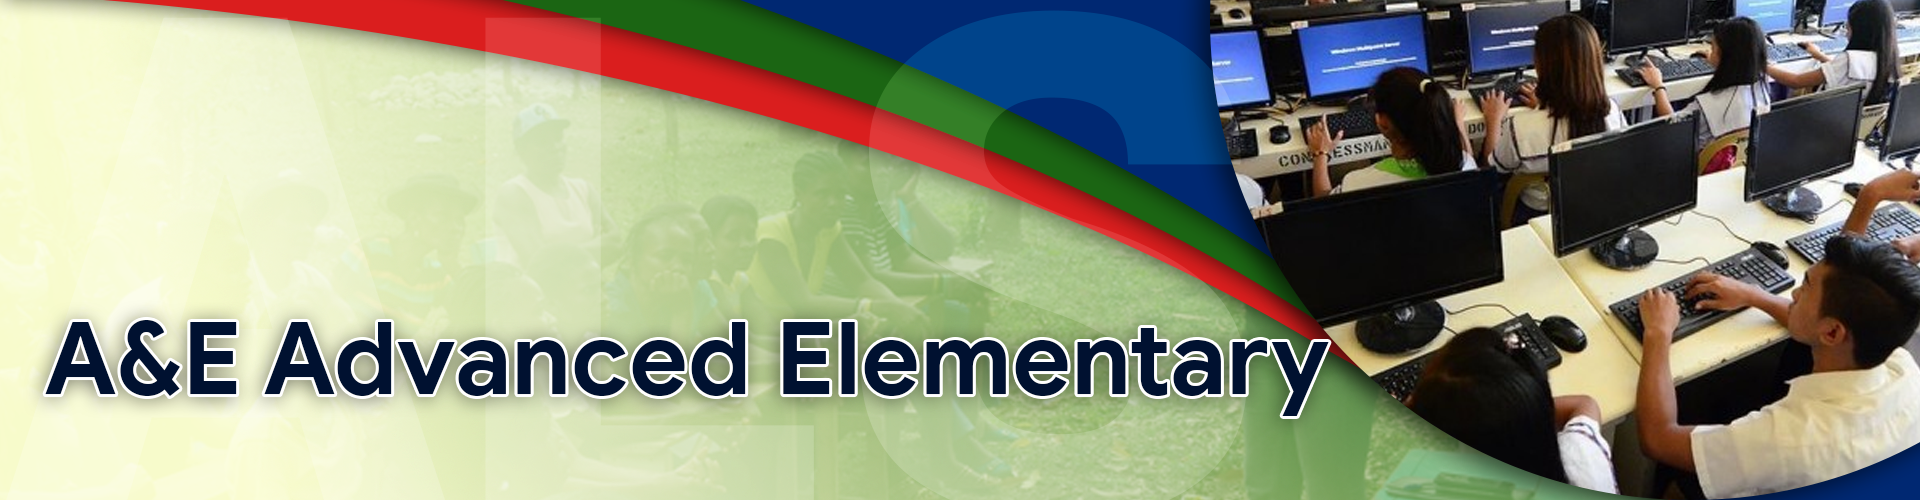 A&E Advanced Elementary